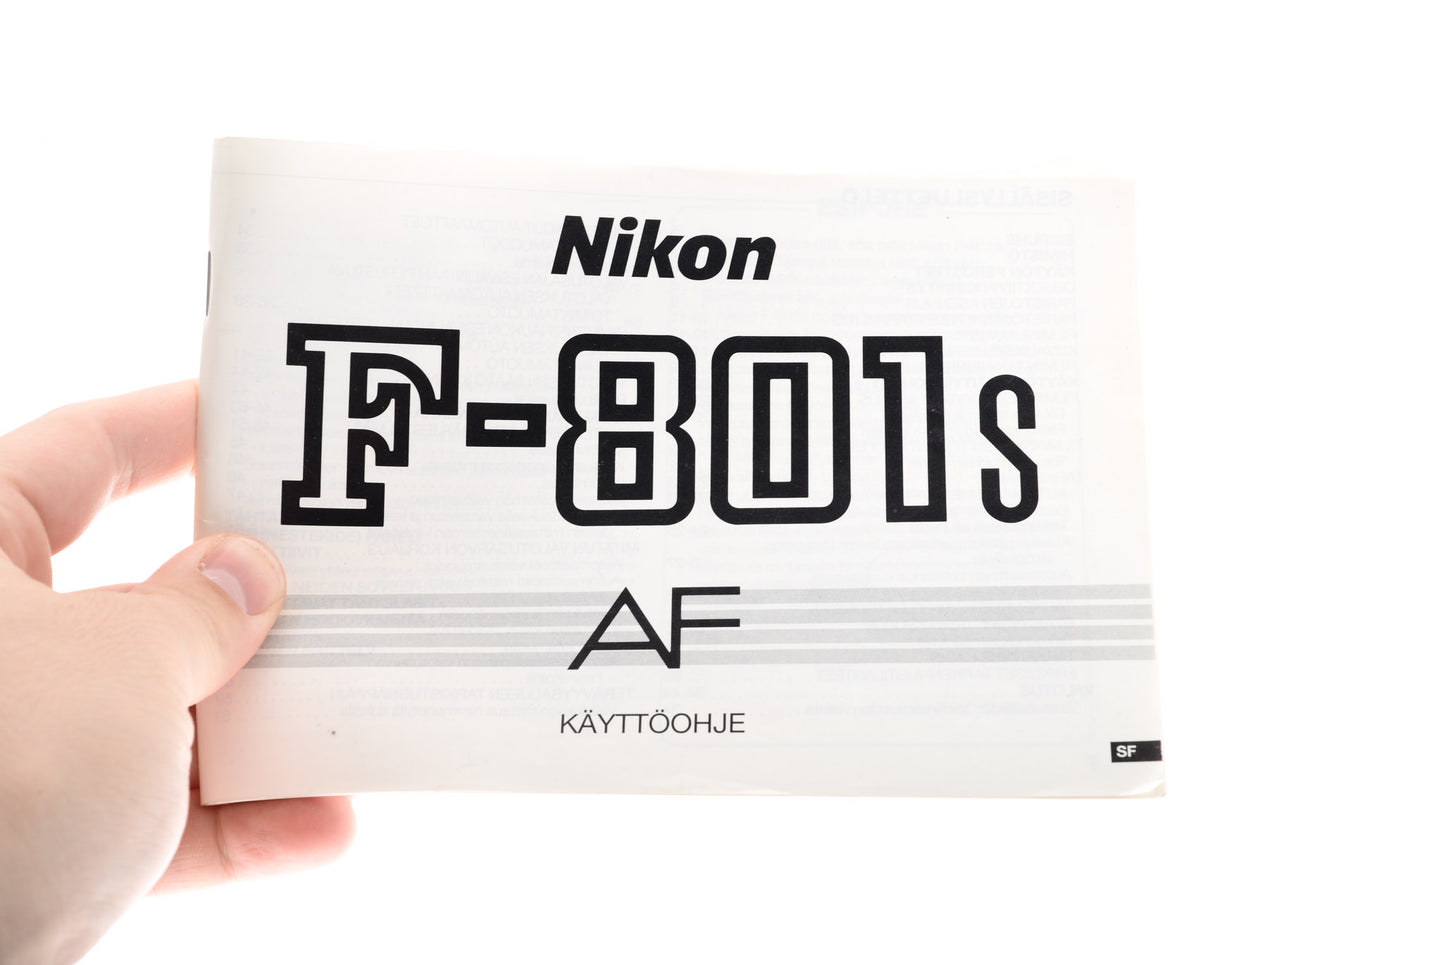 Nikon F-801s Instructions